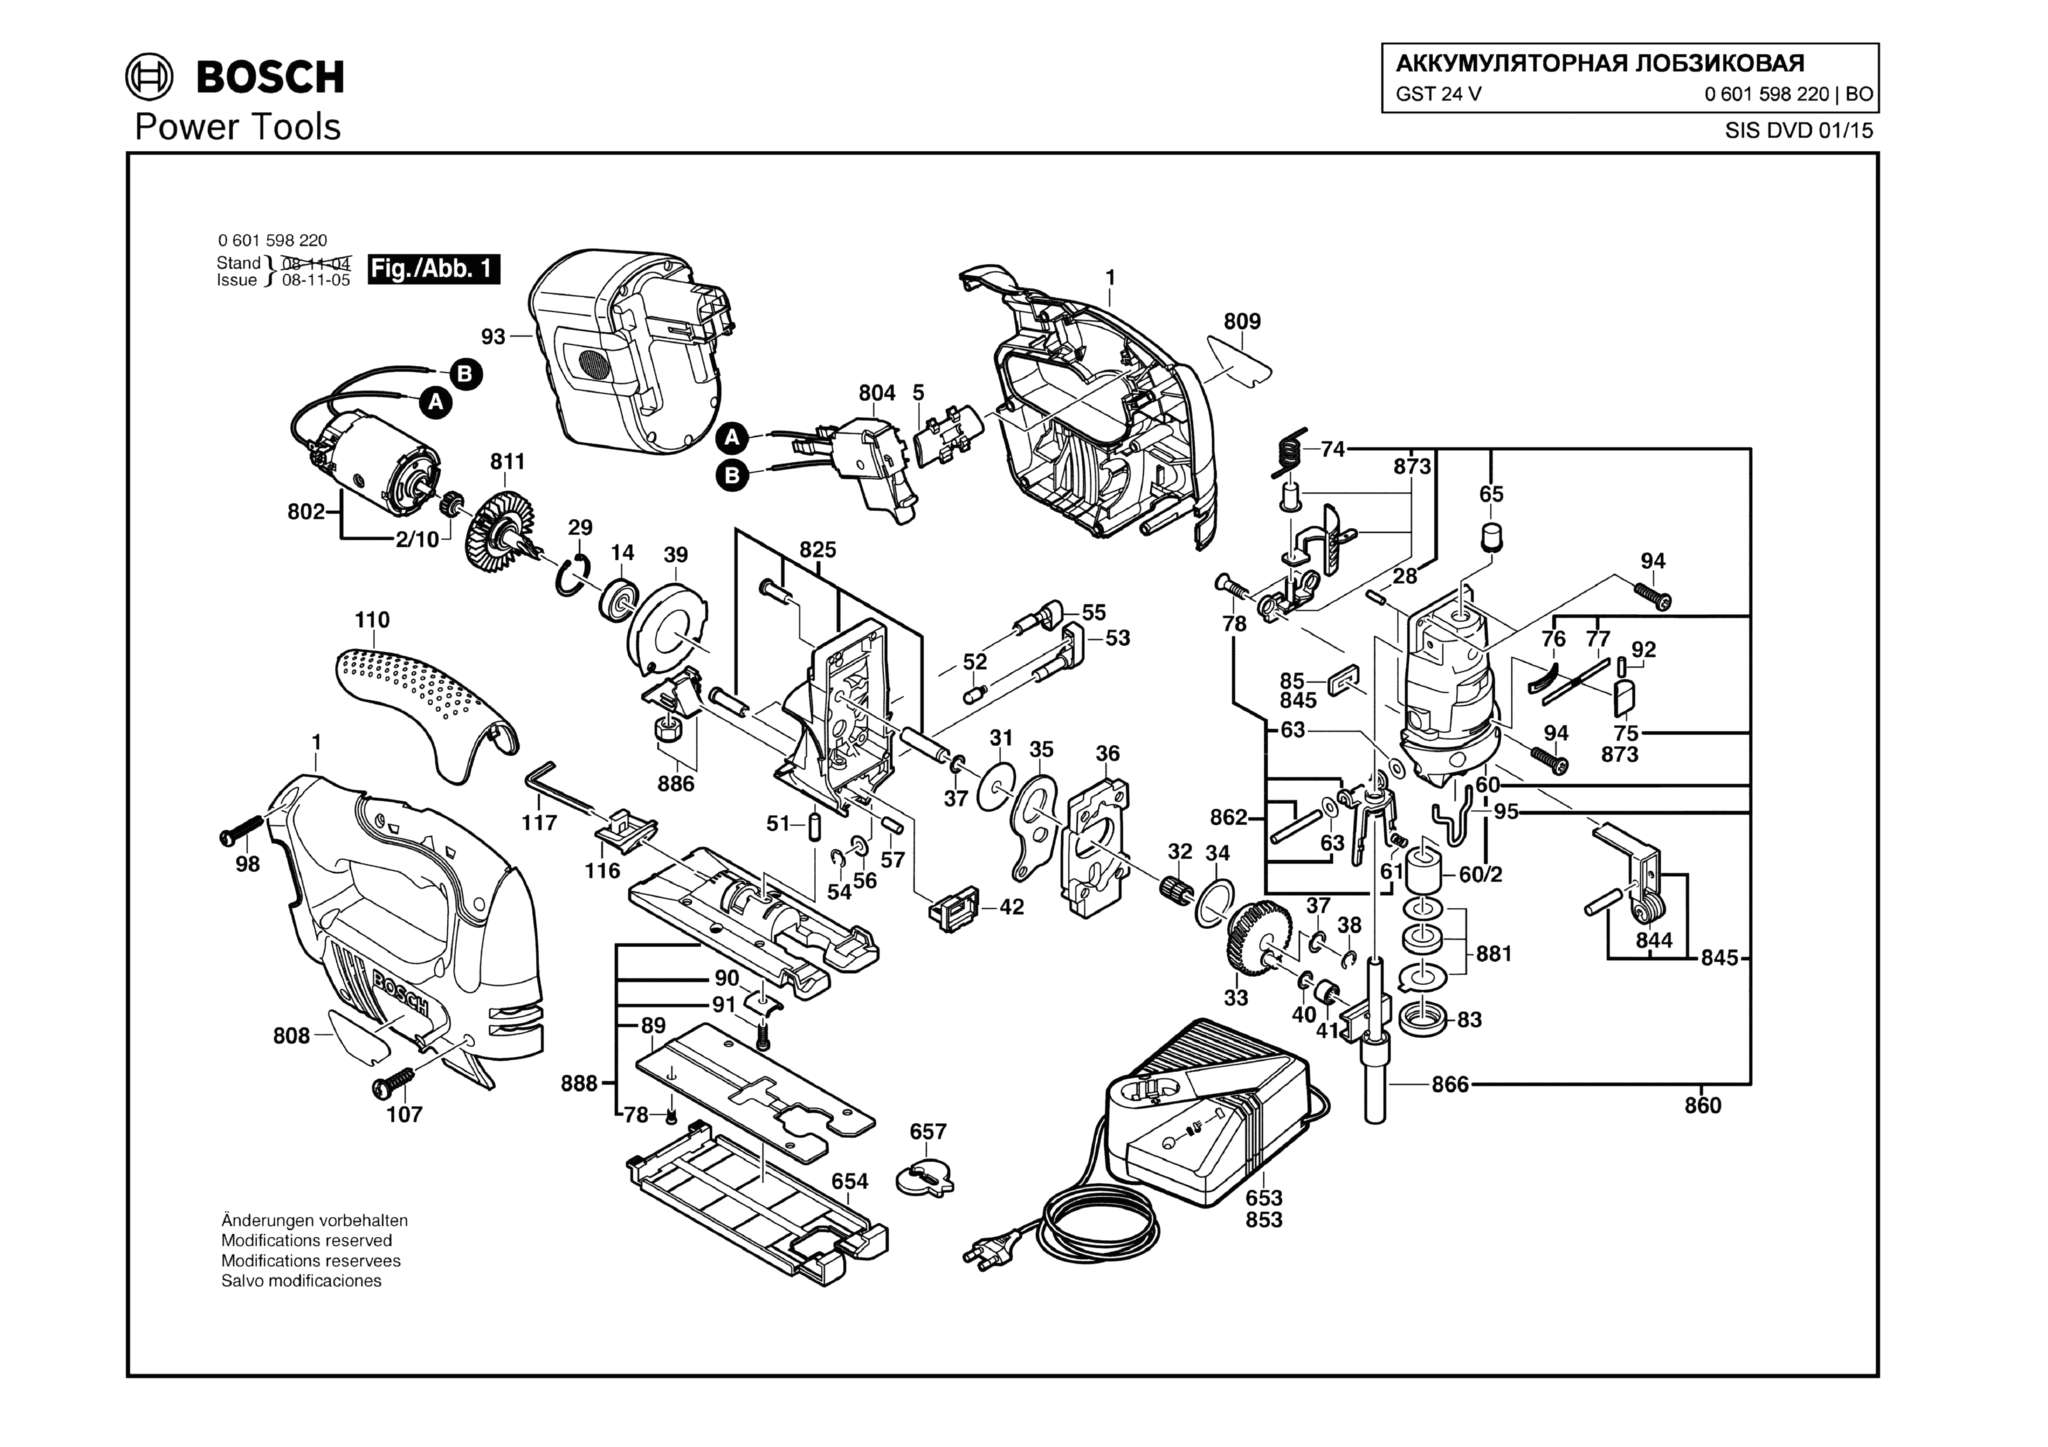 Запчасти, схема и деталировка Bosch GST 24 V (ТИП 0601598220)